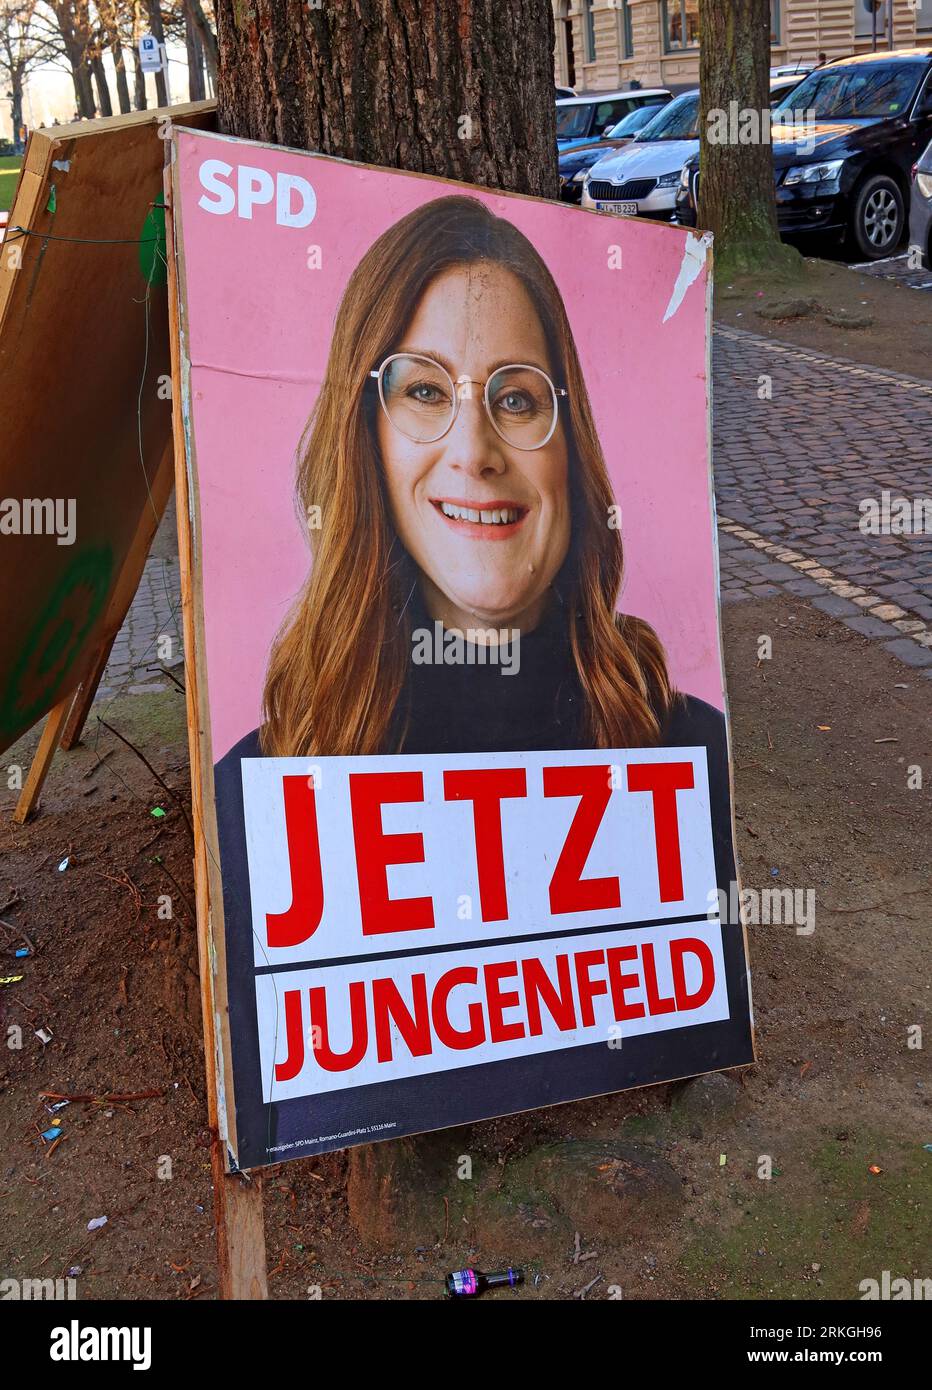 Now - Jetzt Jungenfeld Mainz city politician, SPD political candidate poster - Mombacher Strasse. 61, 55122 Mainz, Rhineland-Palatinate, Germany Stock Photo